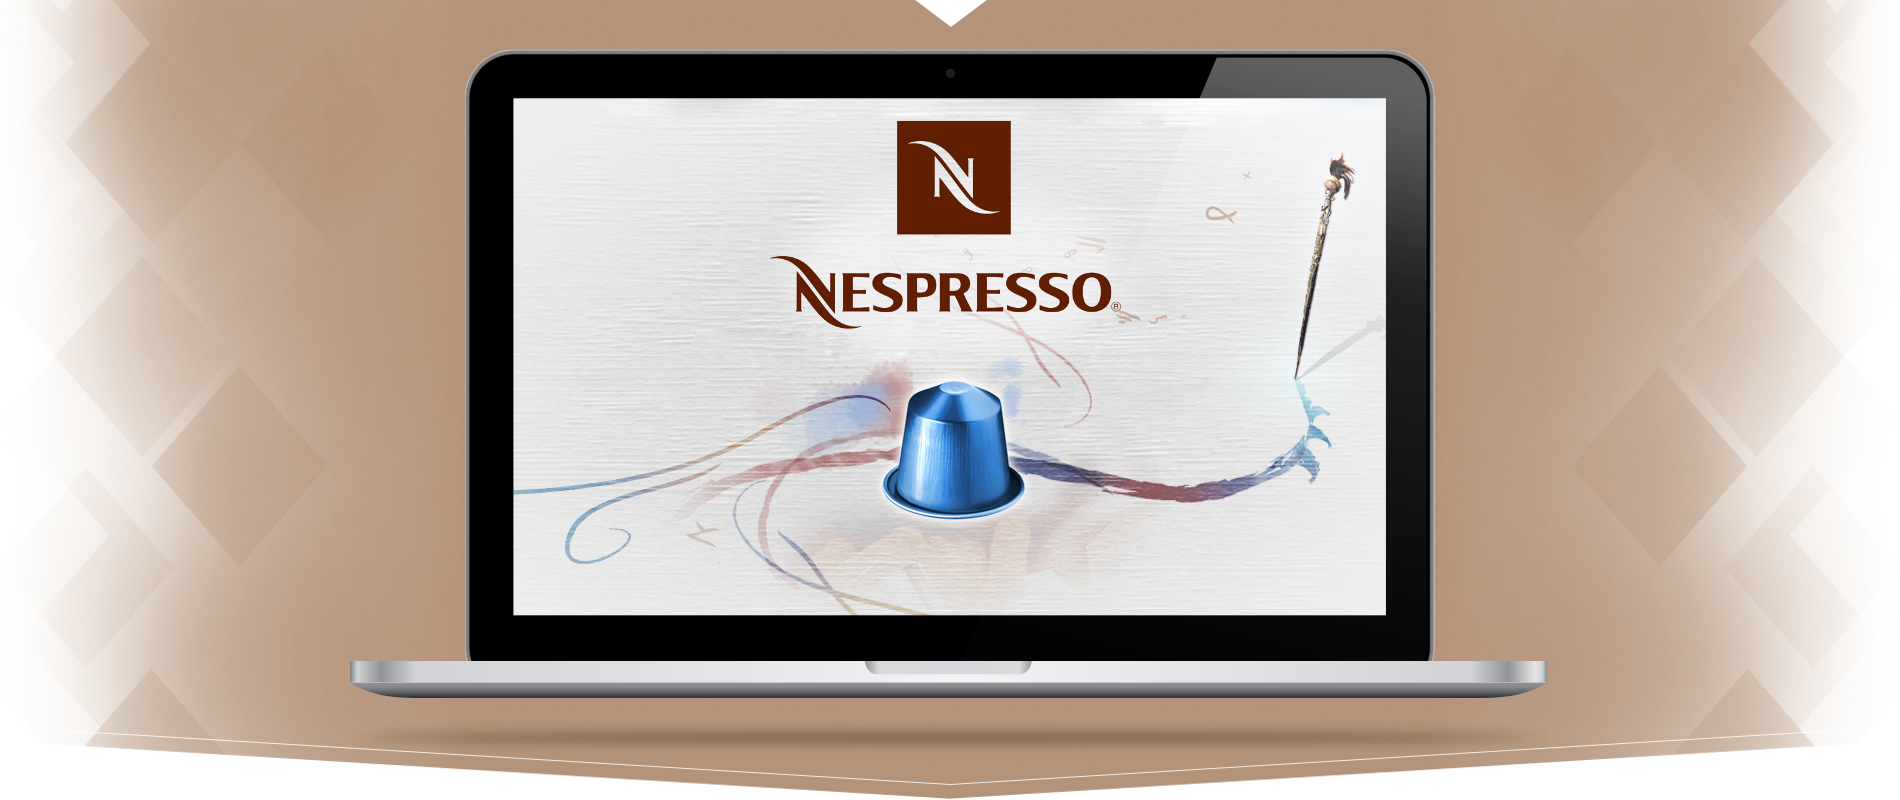 Push-nespresso